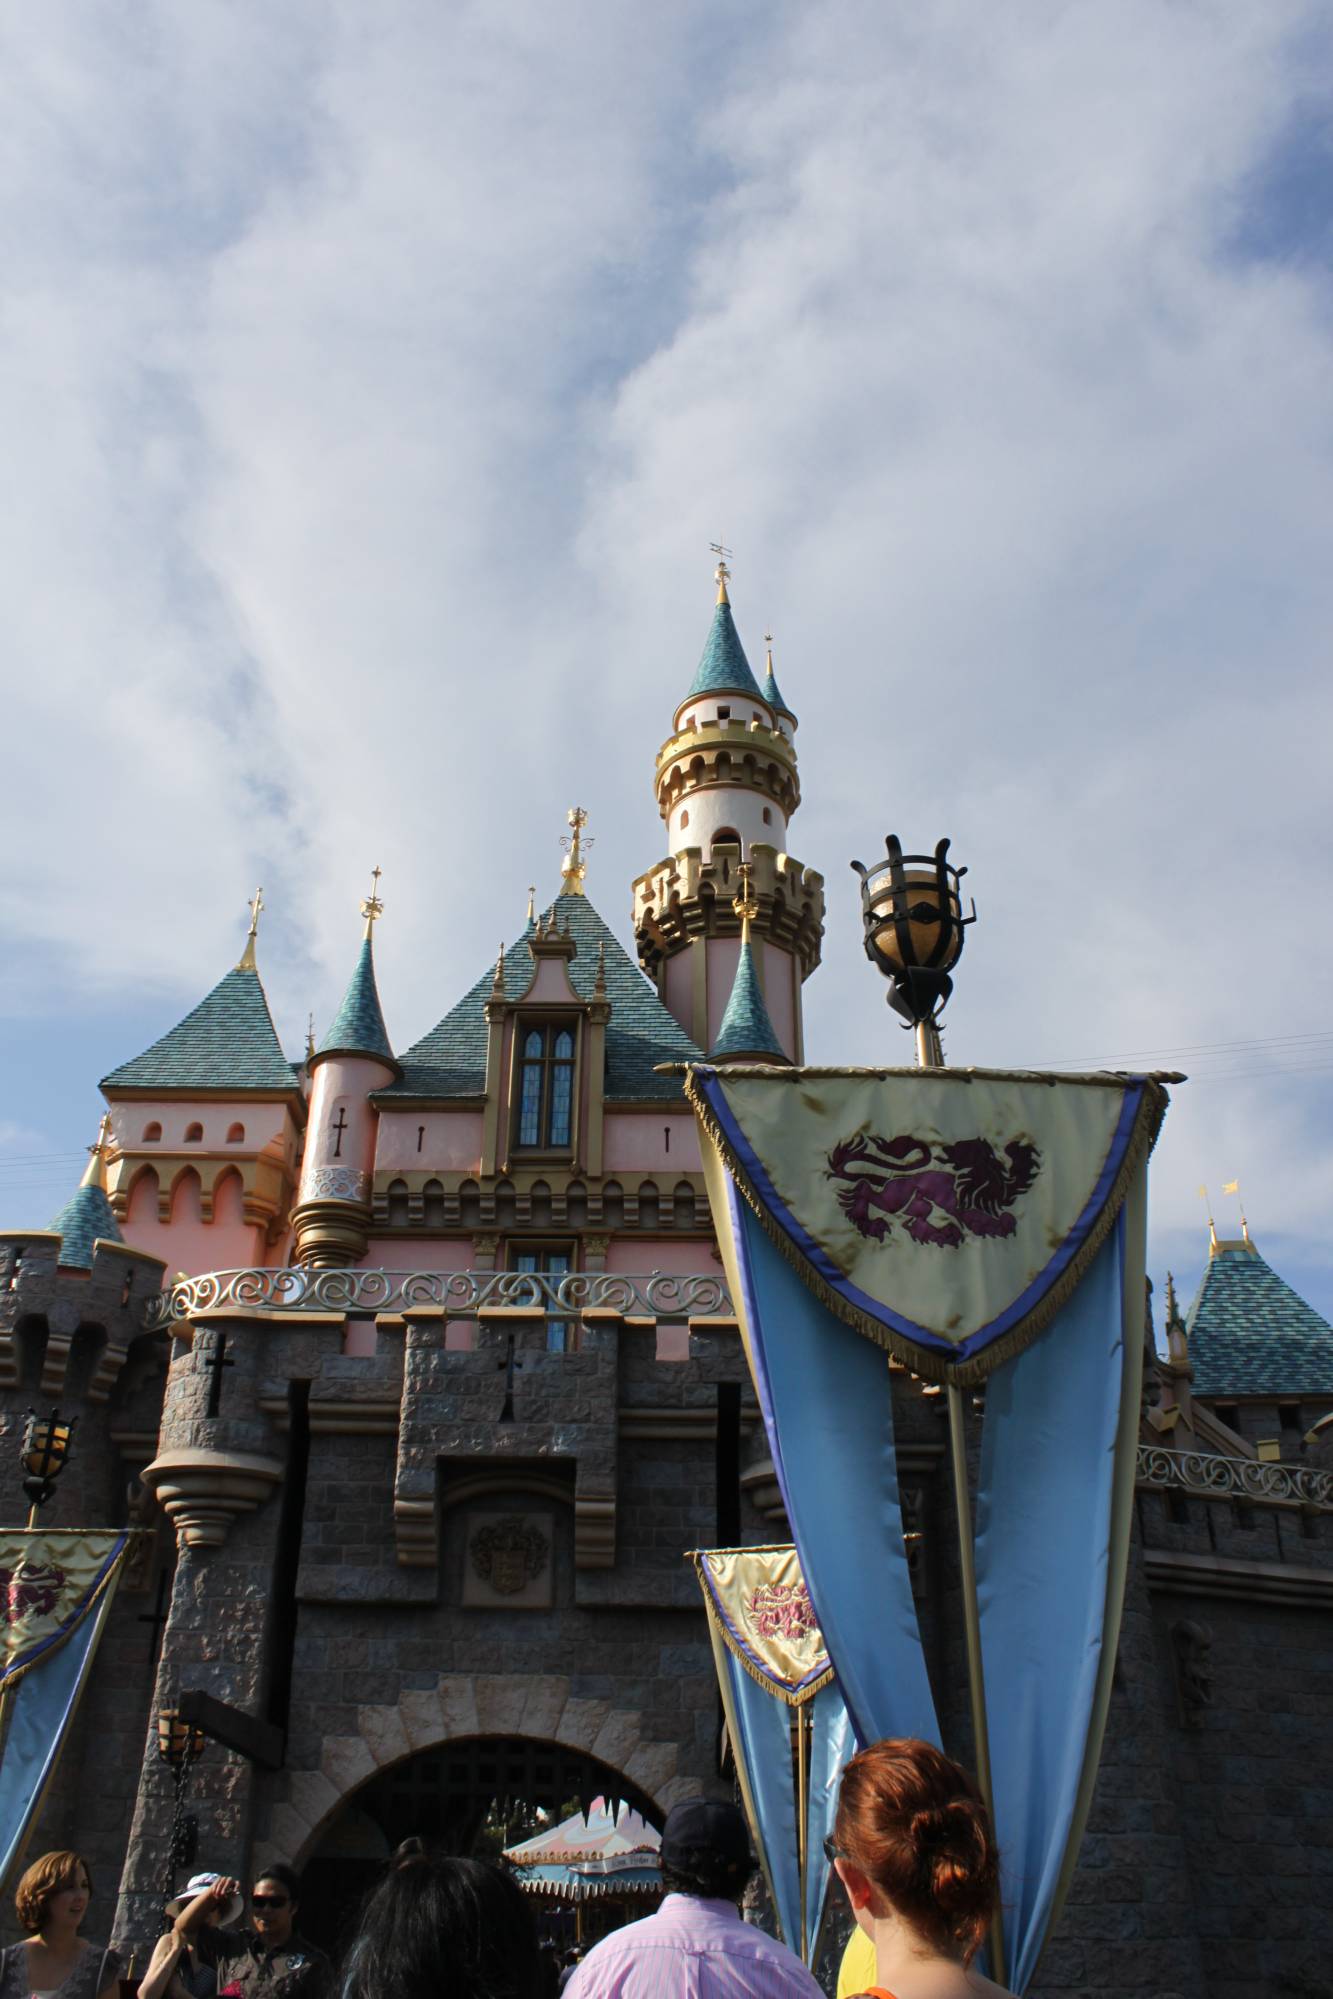 Disneyland - Sleeping Beauty Castle